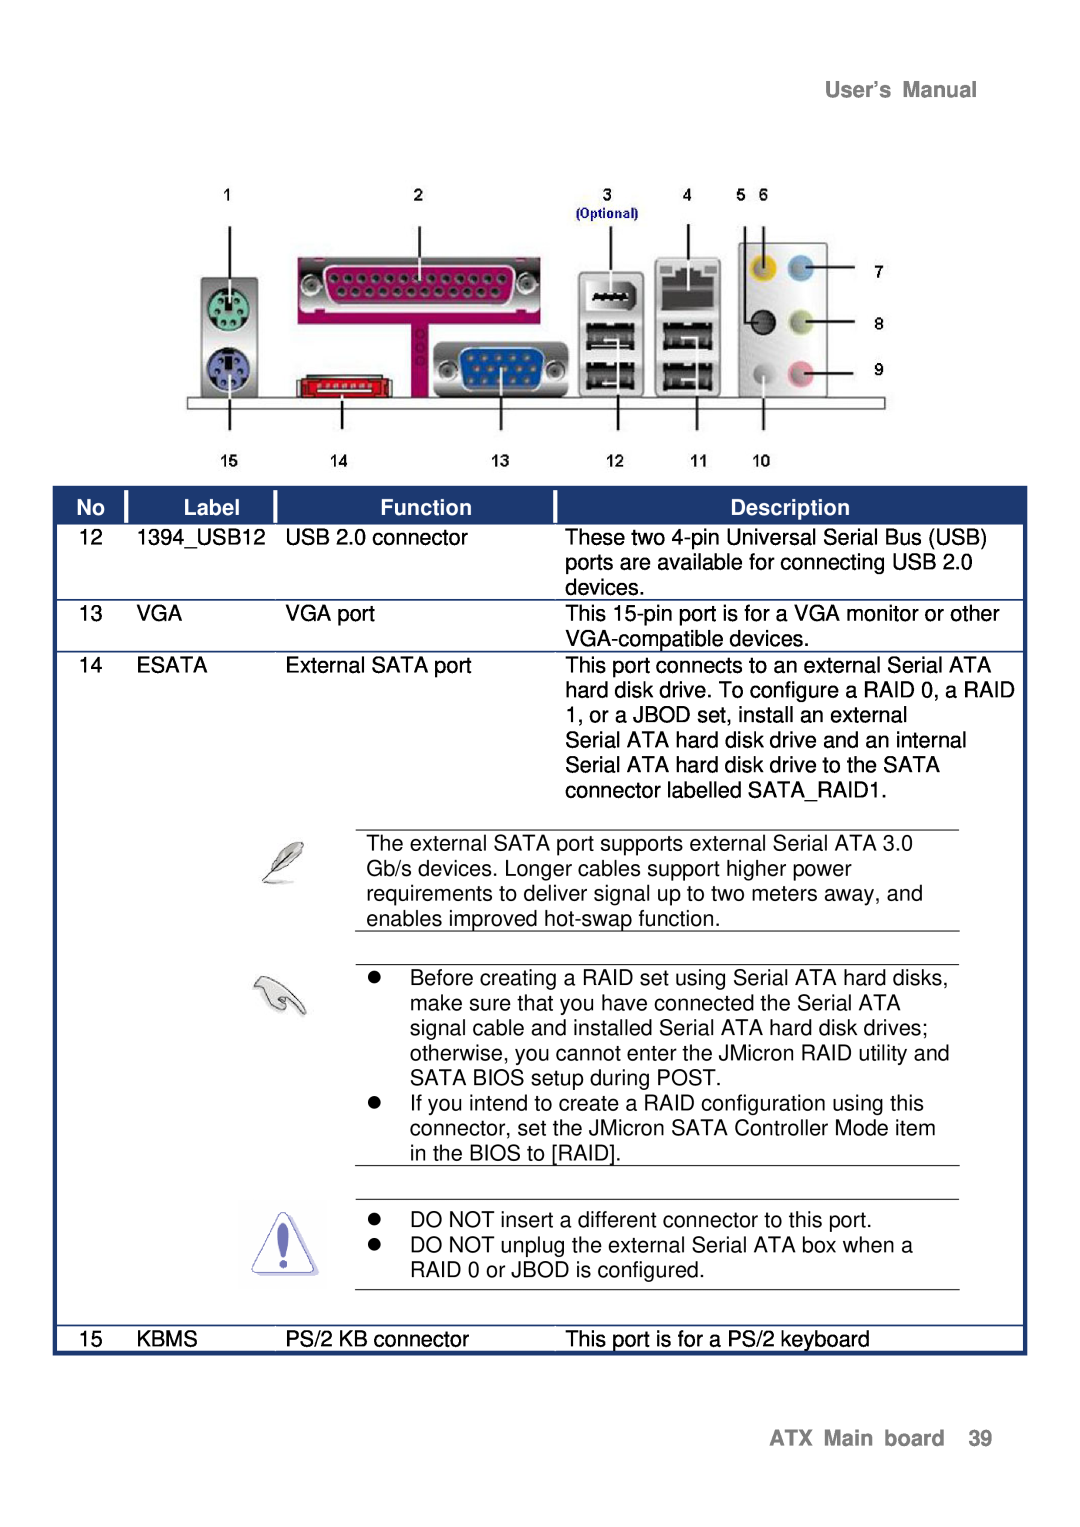 Intel AX965Q user manual User’s Manual, Label, Function, Description, ATX Main board 